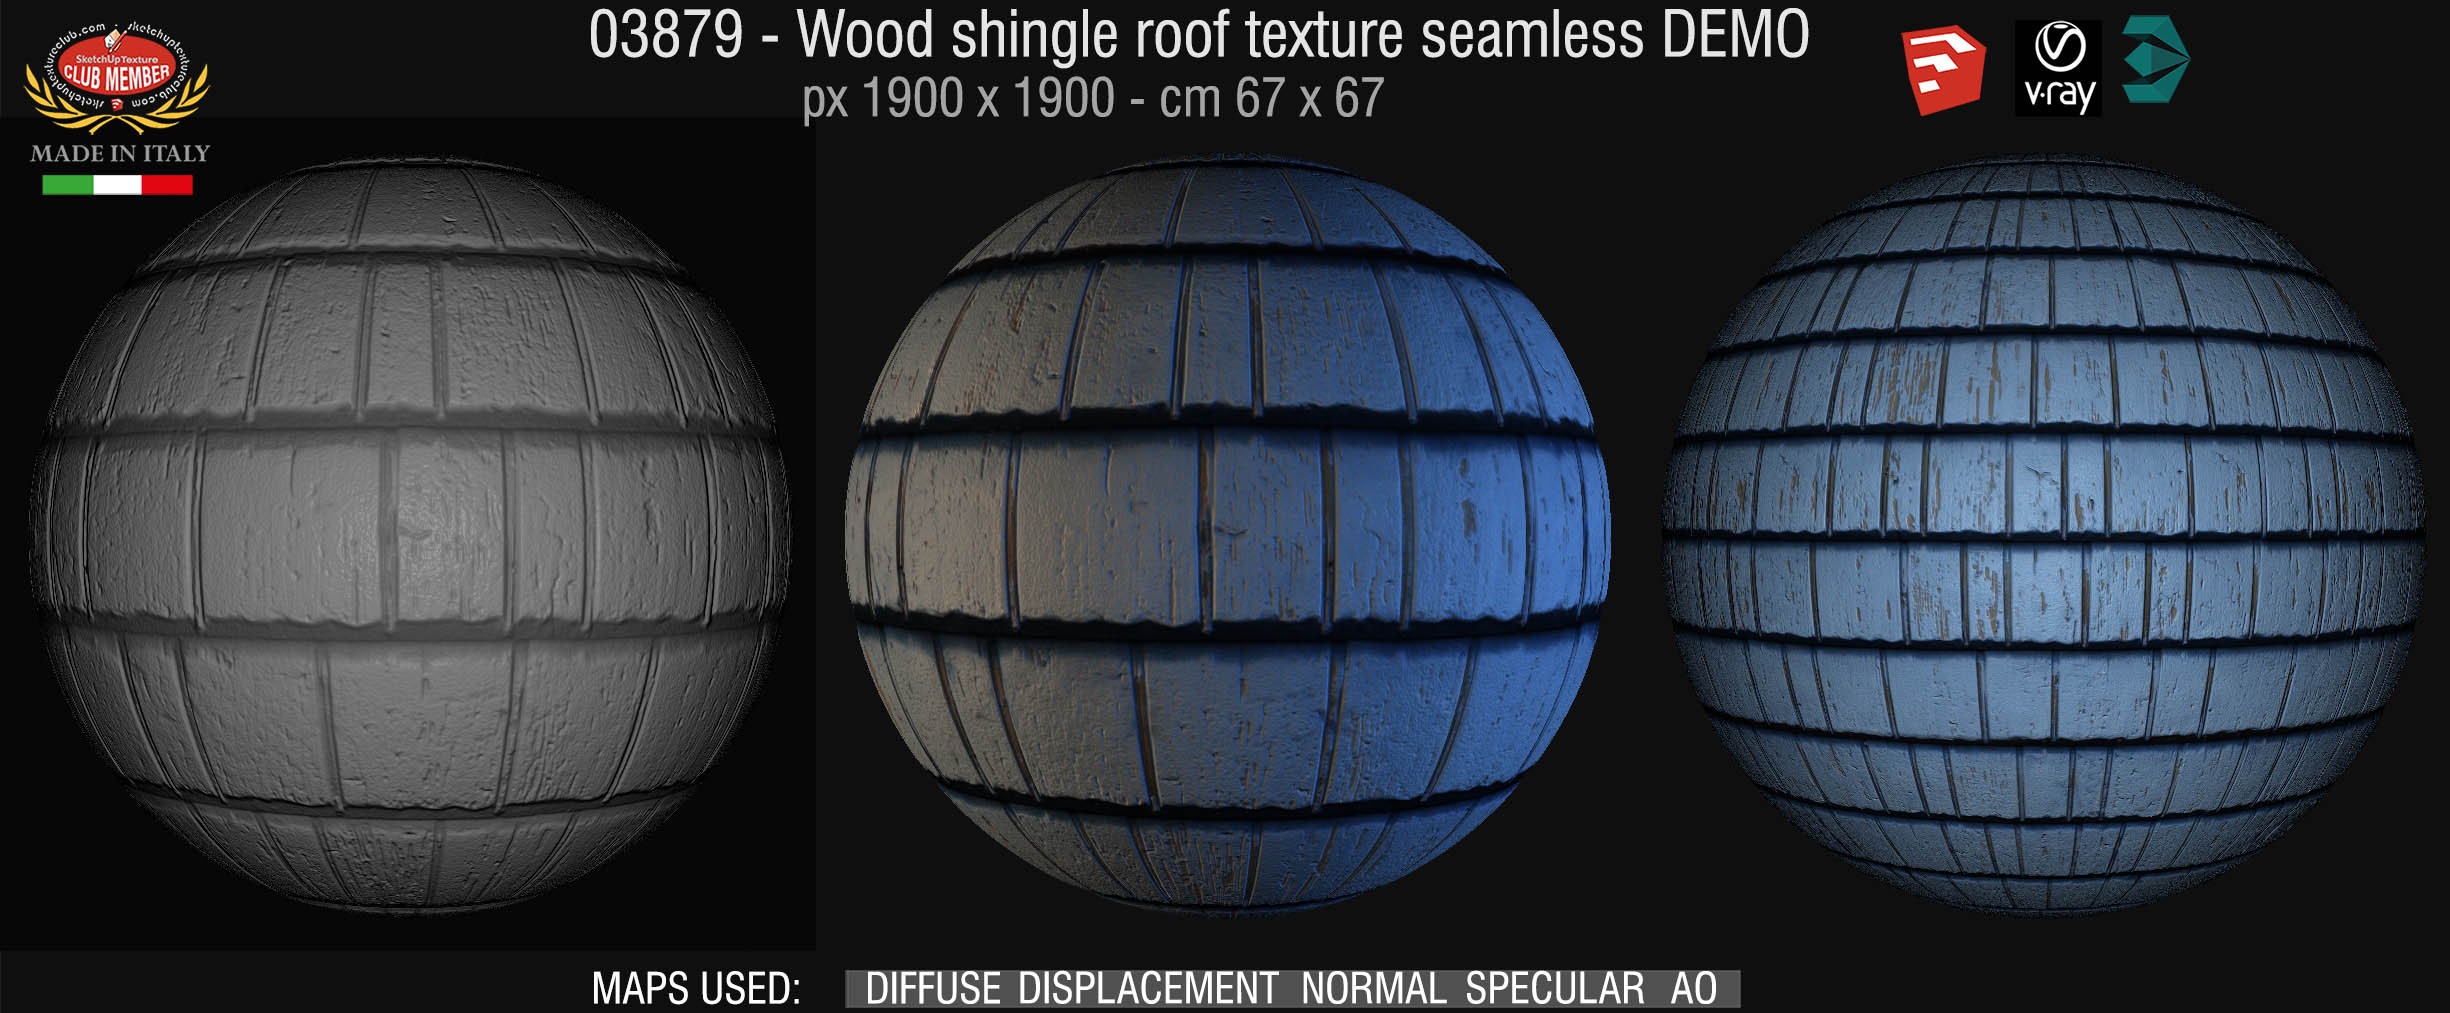 03879 Wood shingle roof texture seamless + maps DEMO